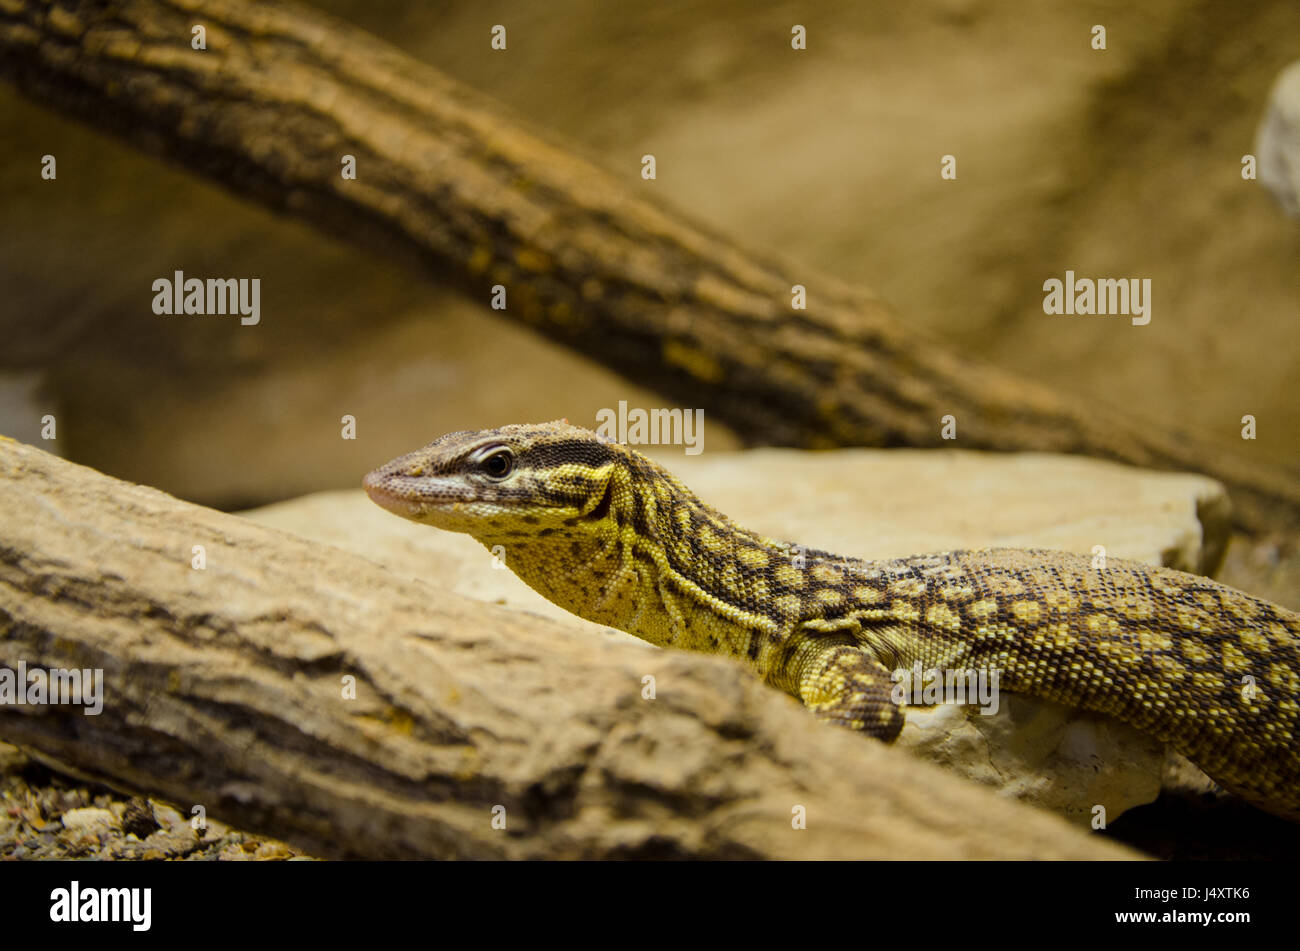 Large lizard on a stone Stock Photo